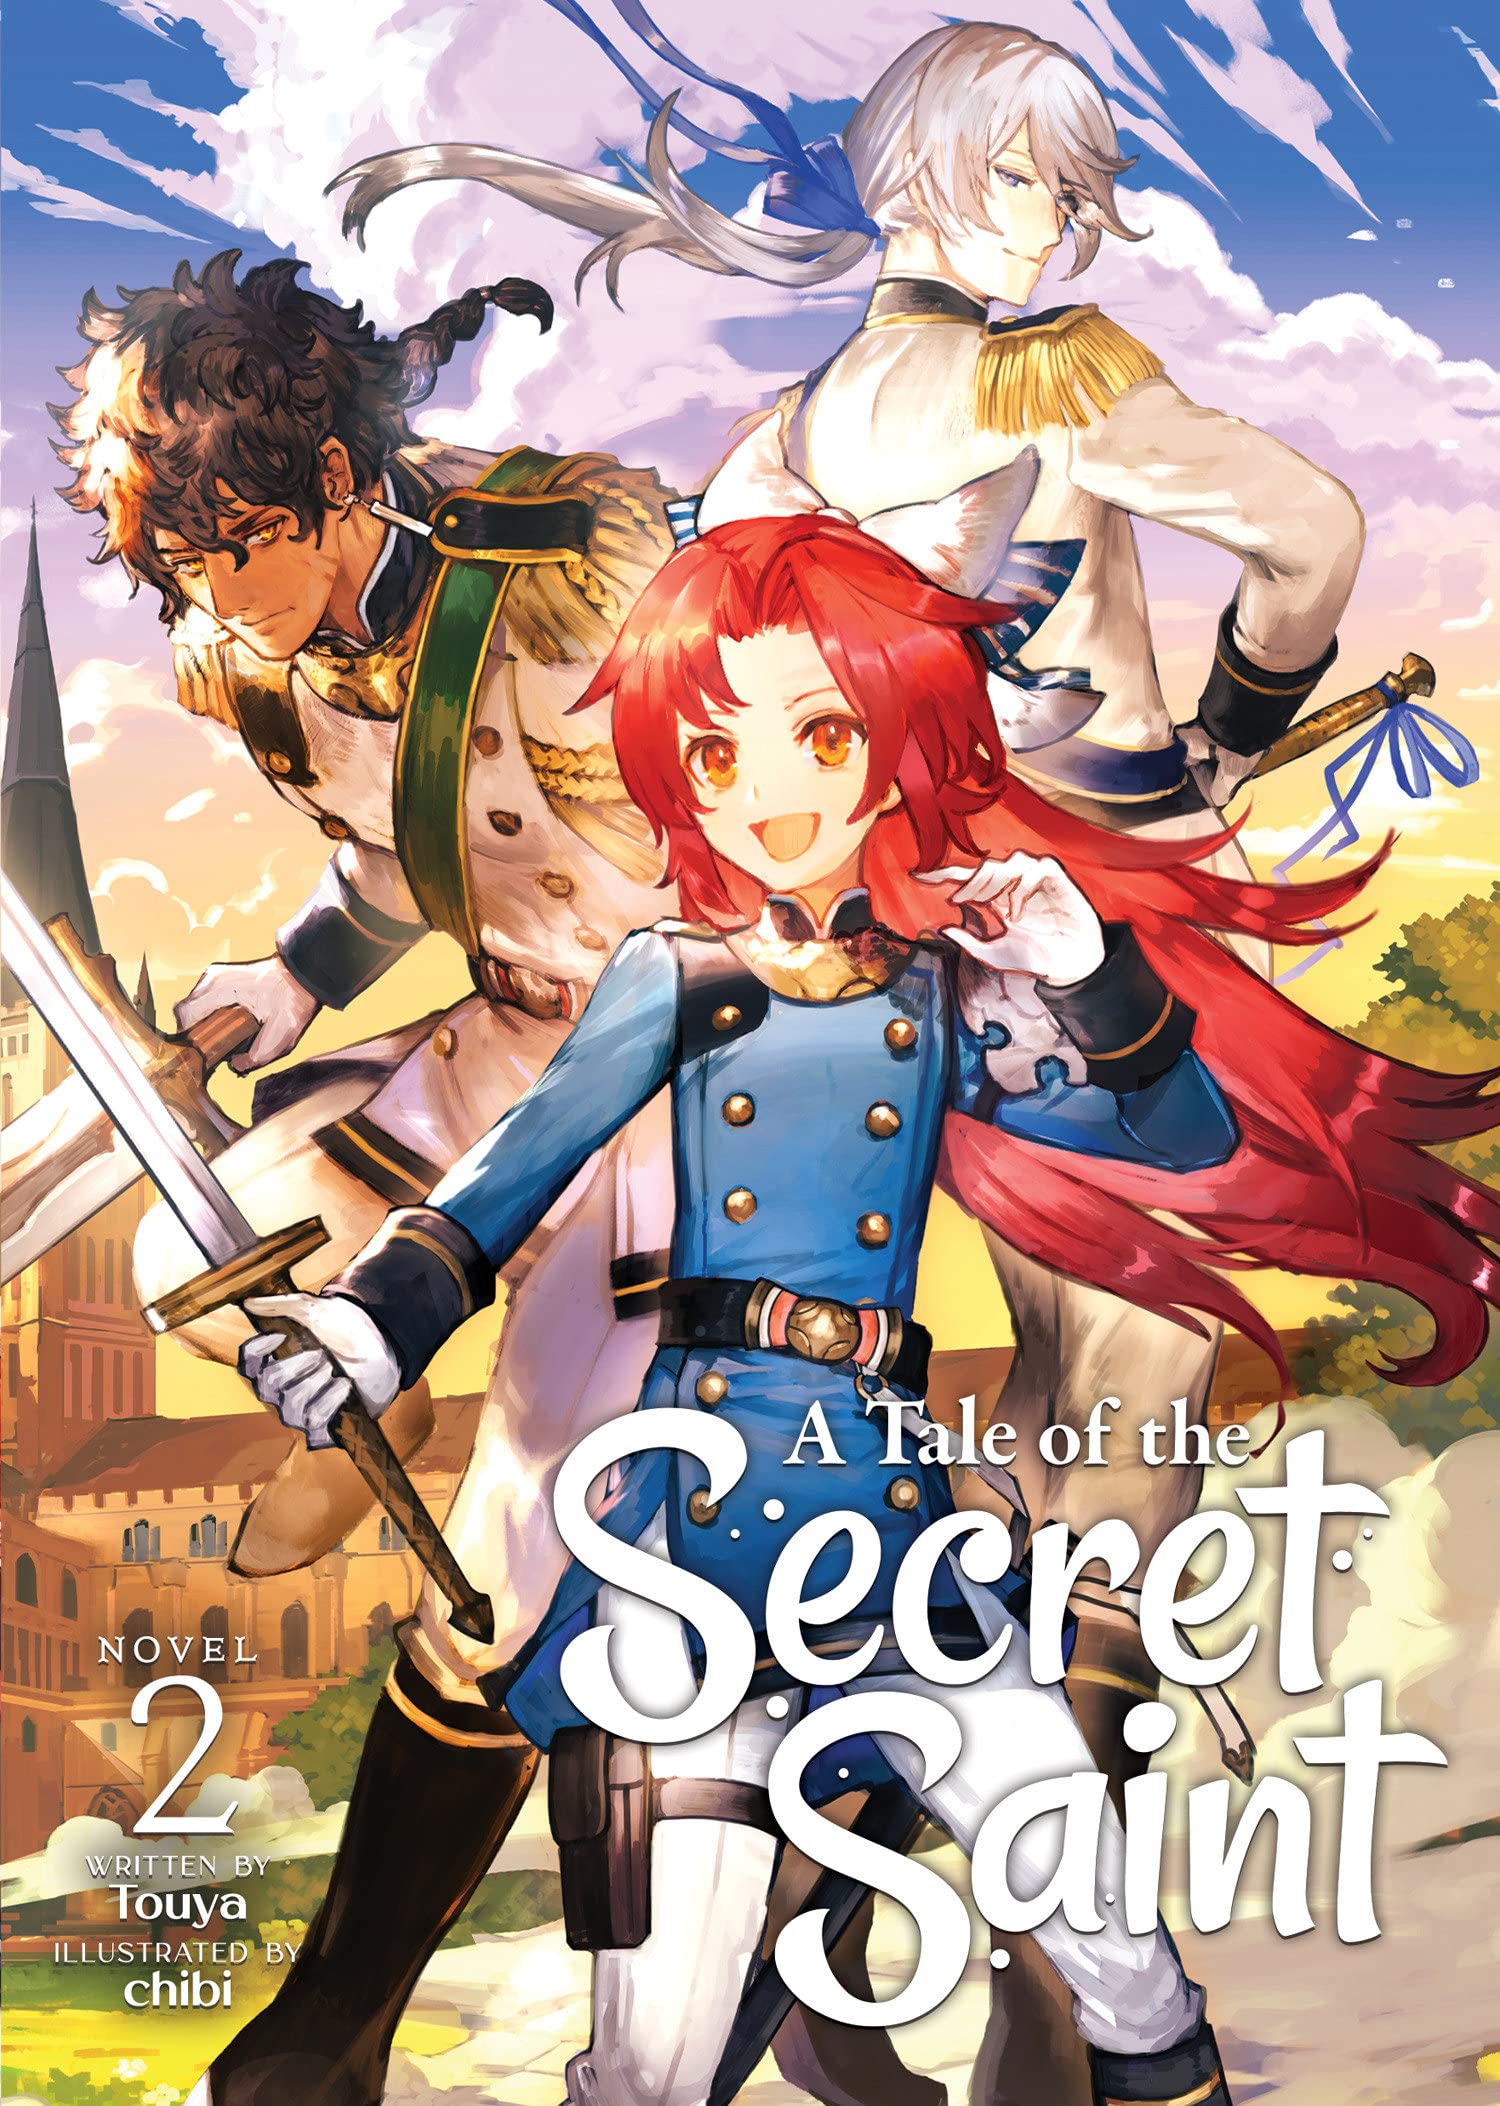 A Tale of the Secret Saint (Light Novel) Vol. 02